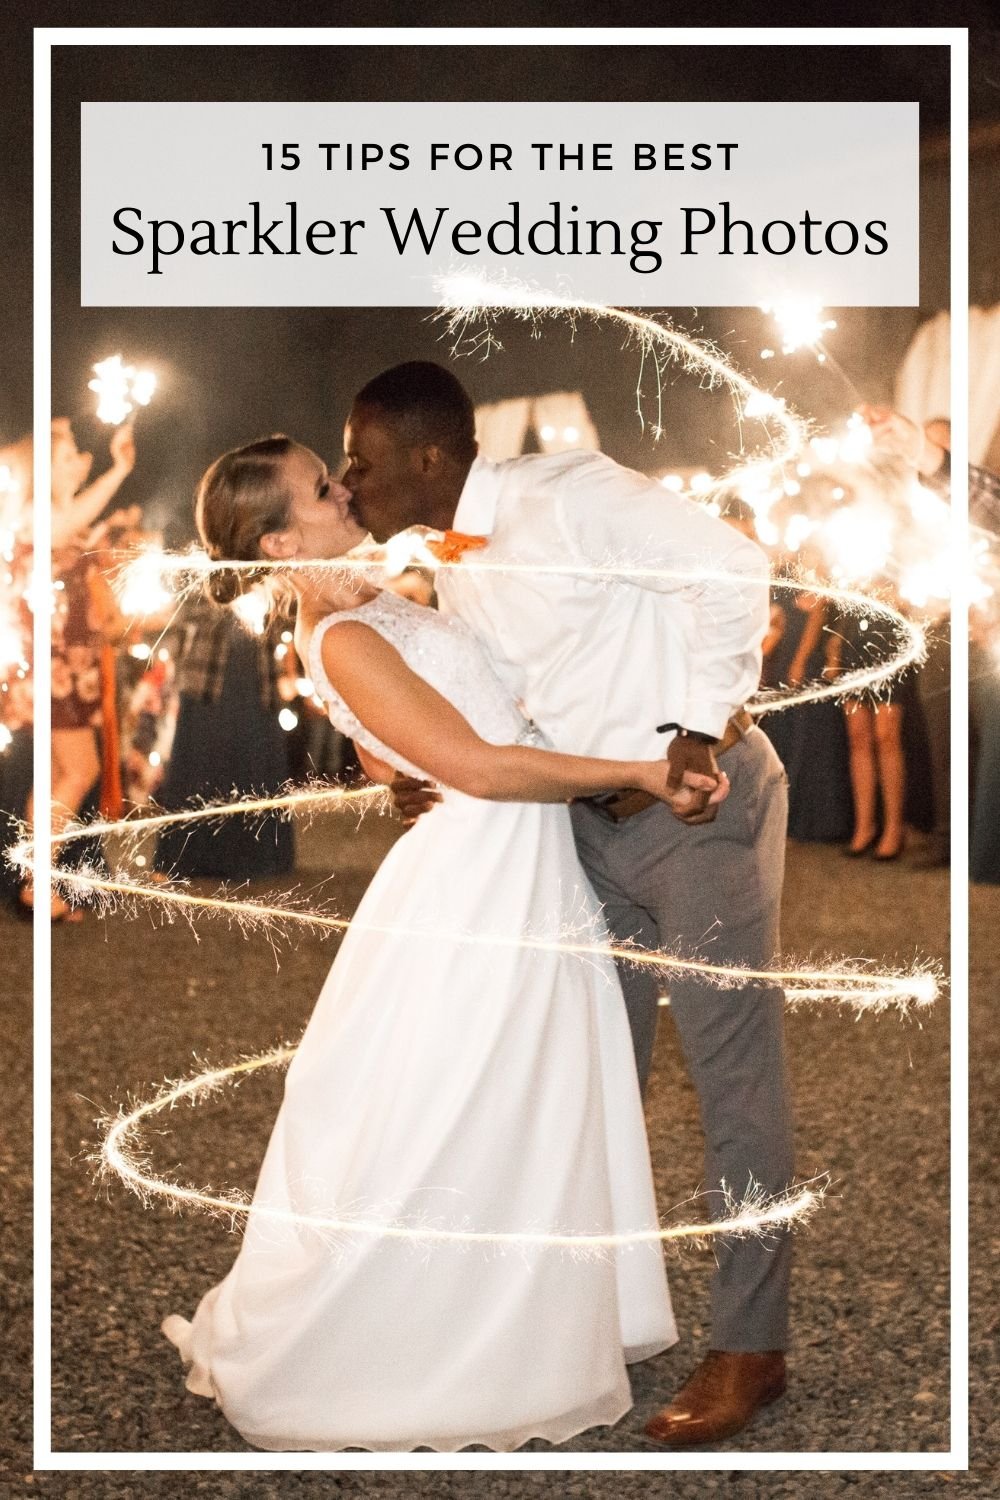 Sparkler wedding photography tips